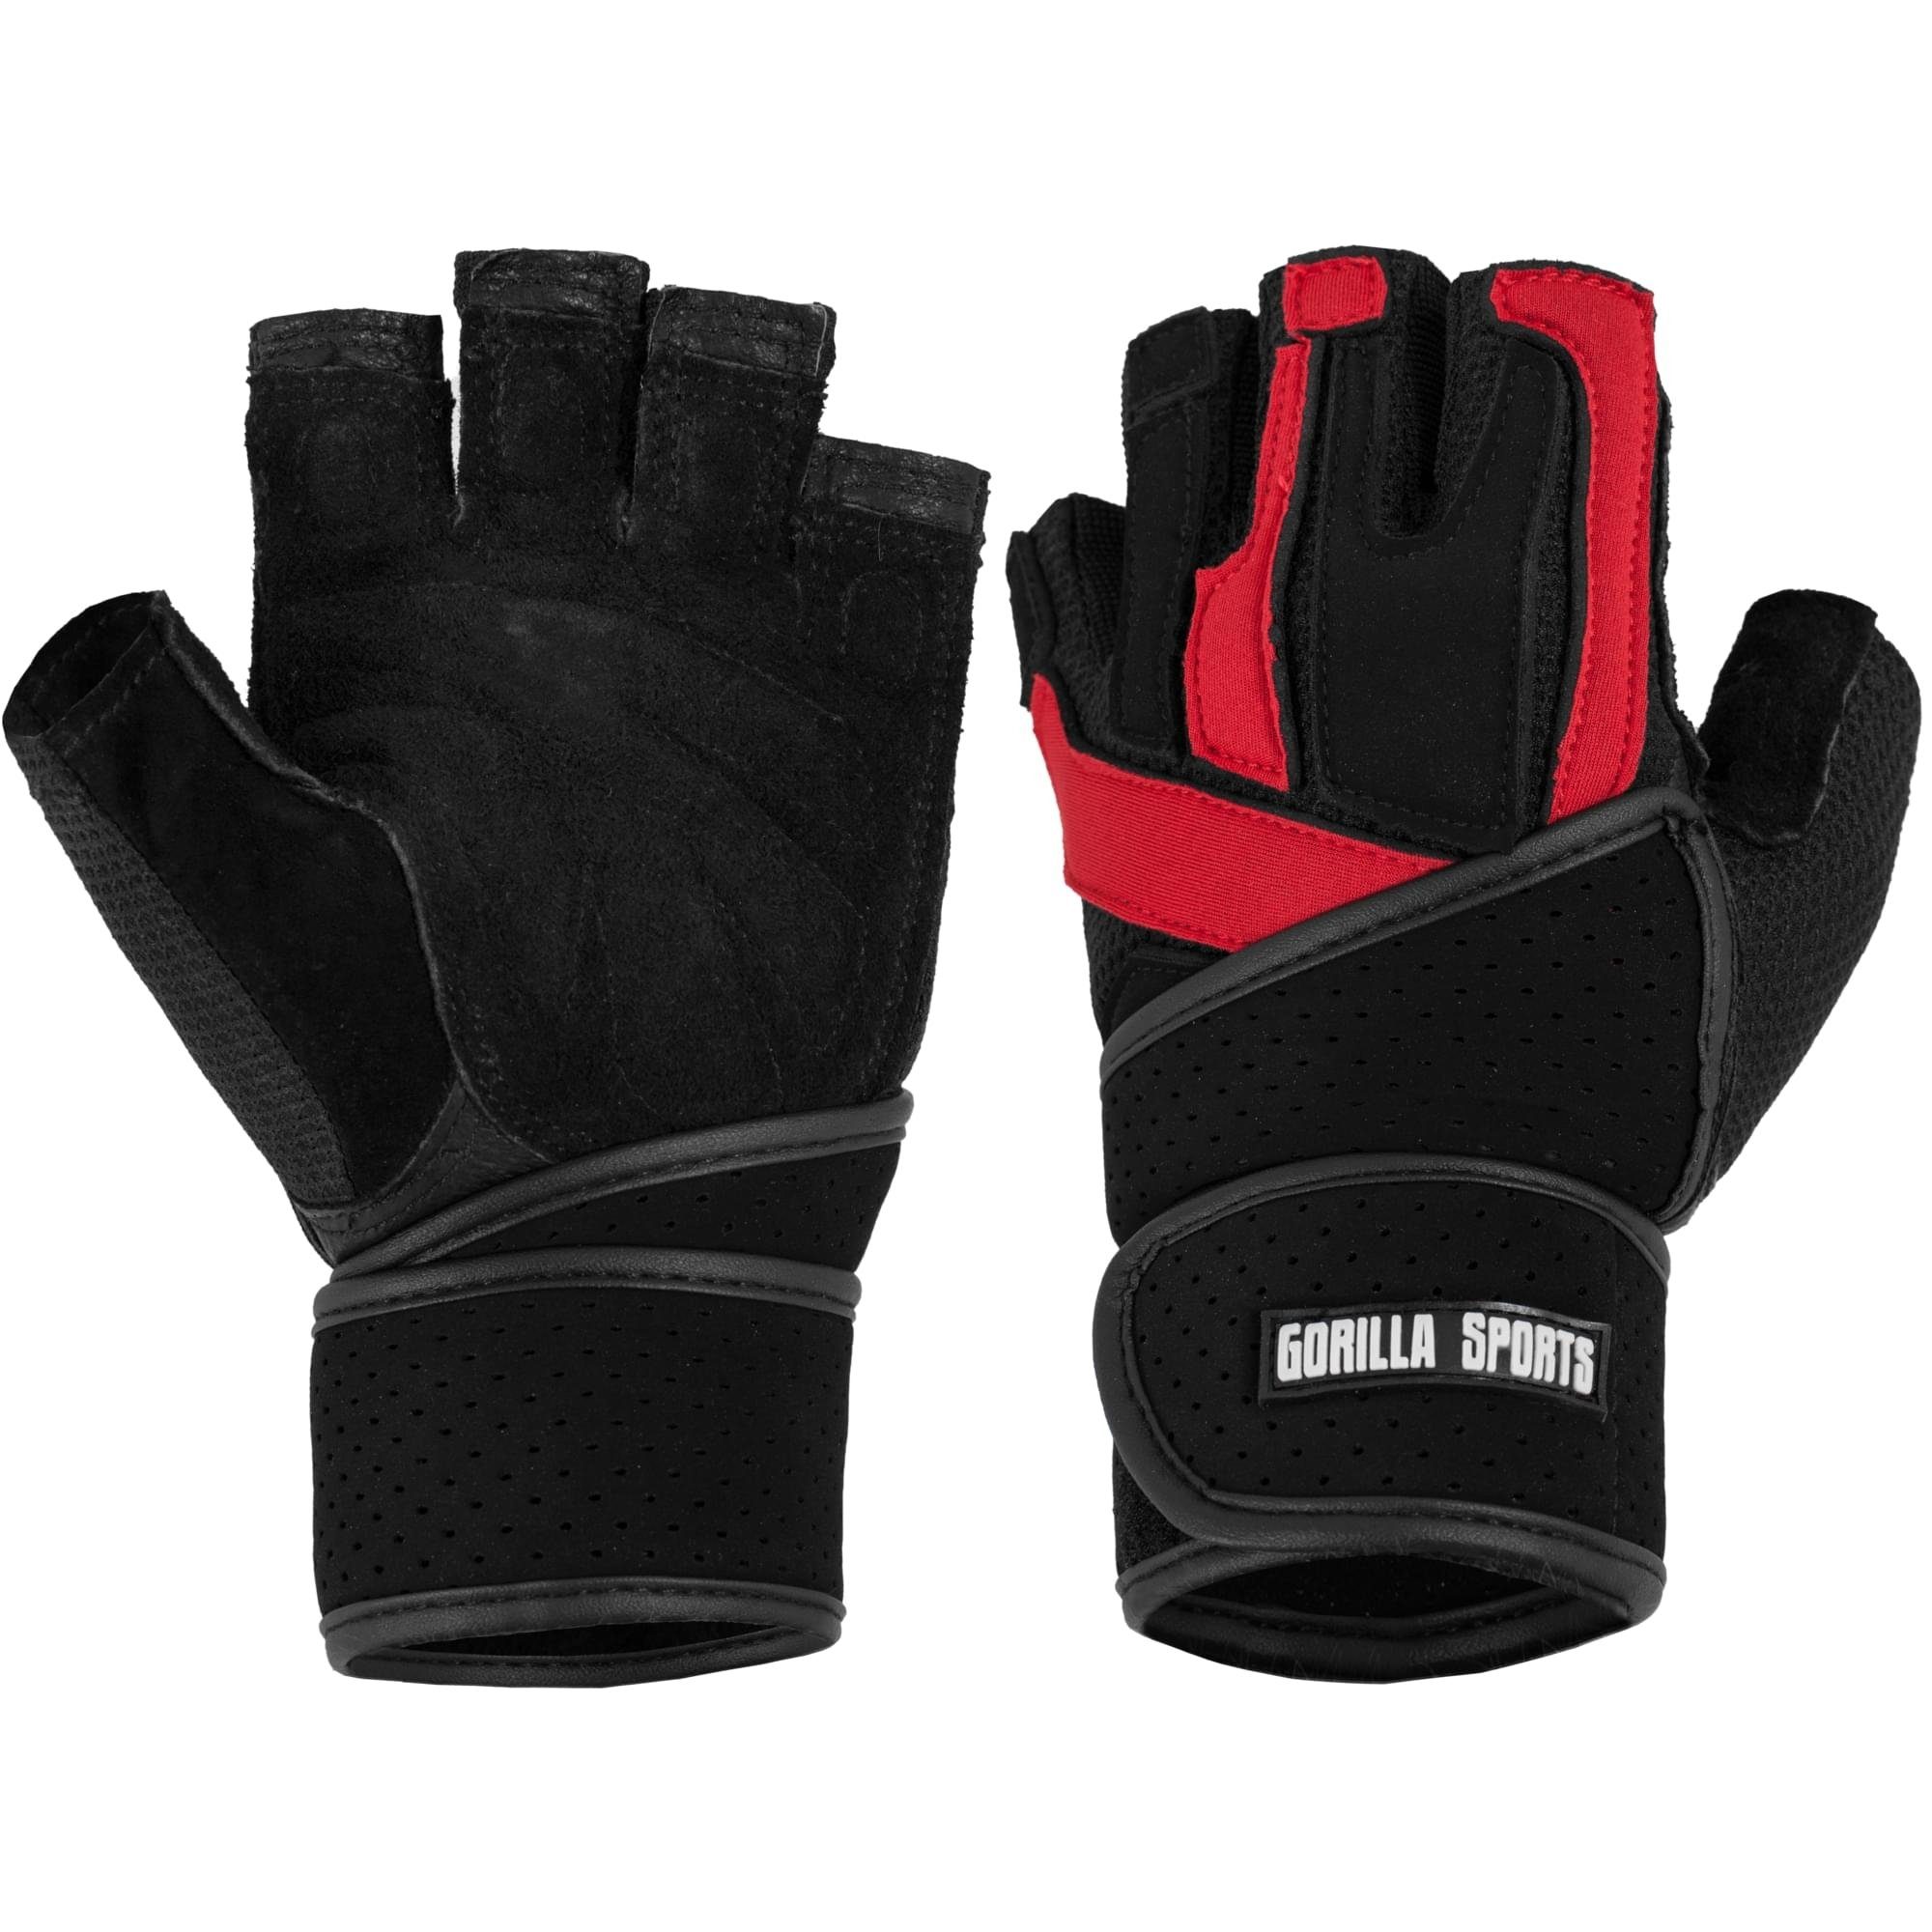 GORILLA SPORTS Trainingshandschuhe Fitness Handschuhe - mit Handgelenkstütze, Leder, Sporthandschuhe